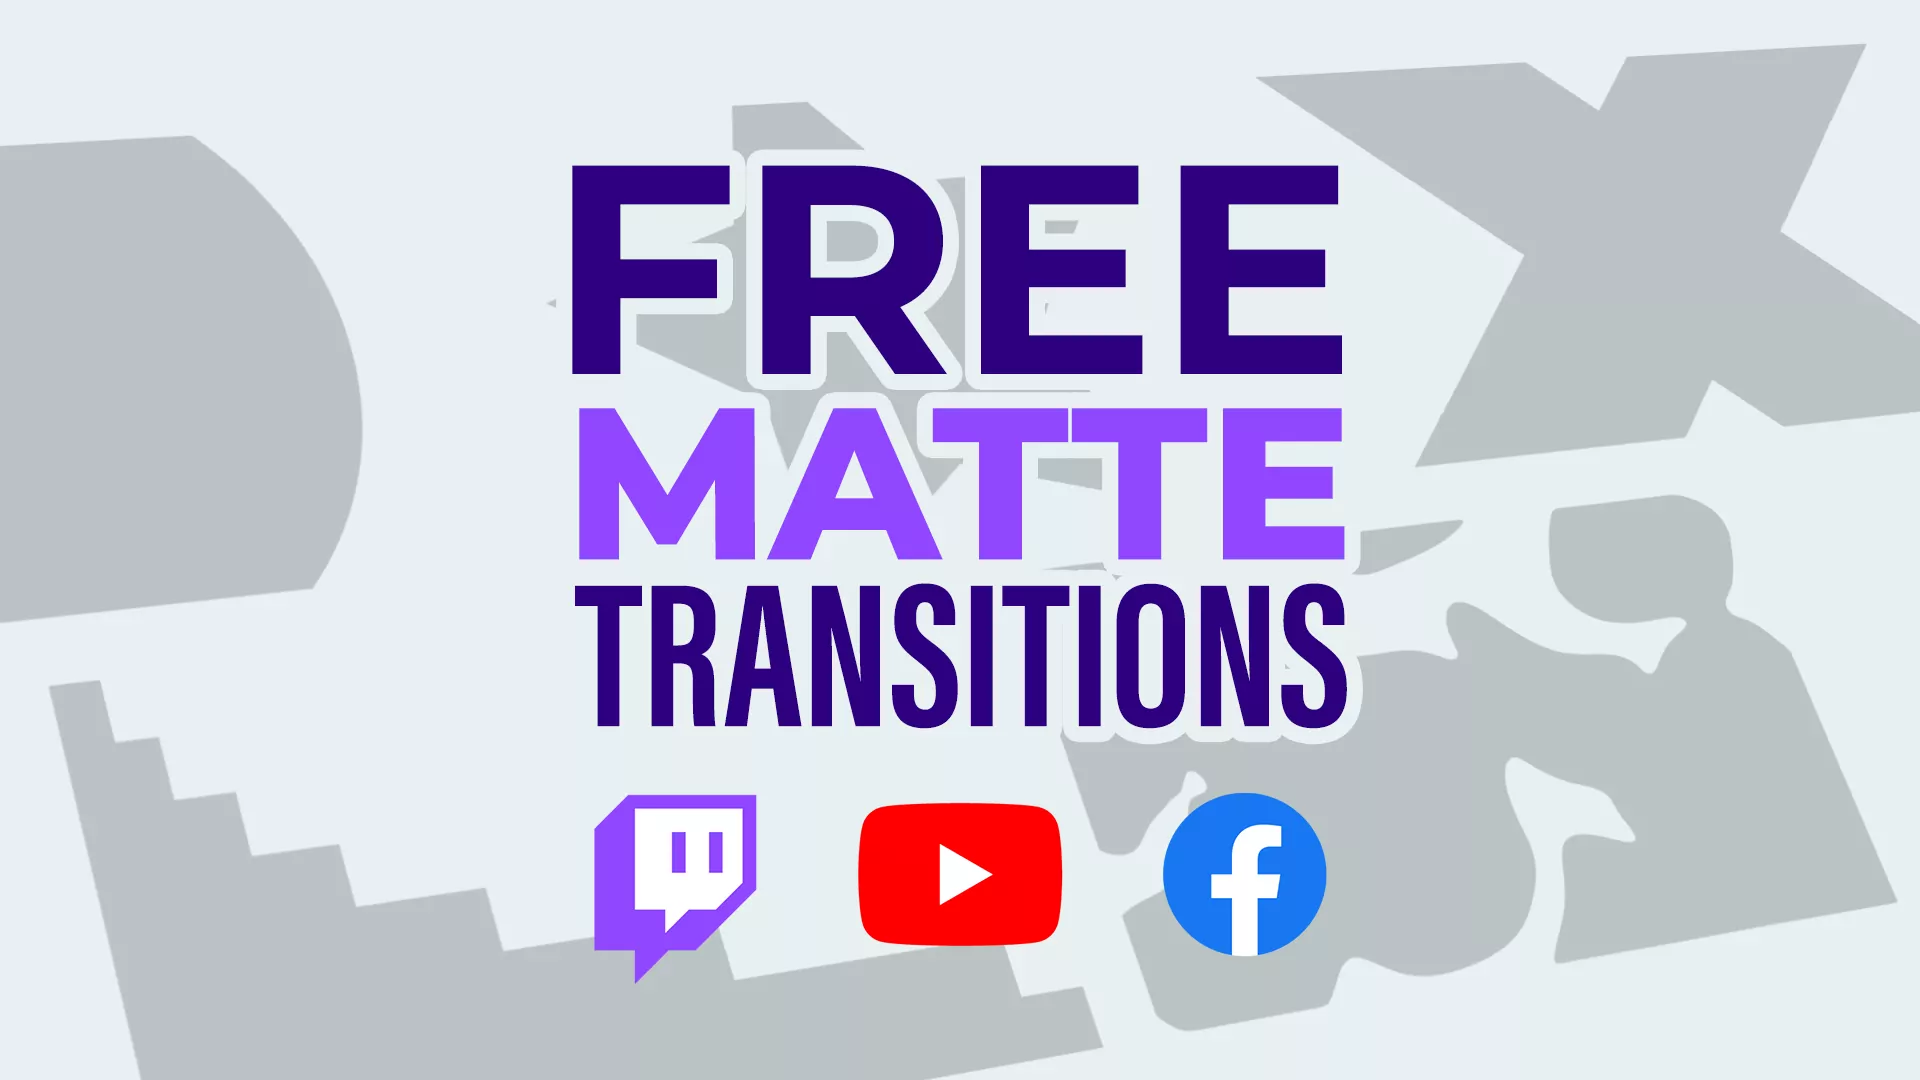 Free Stream Transitions - Matte